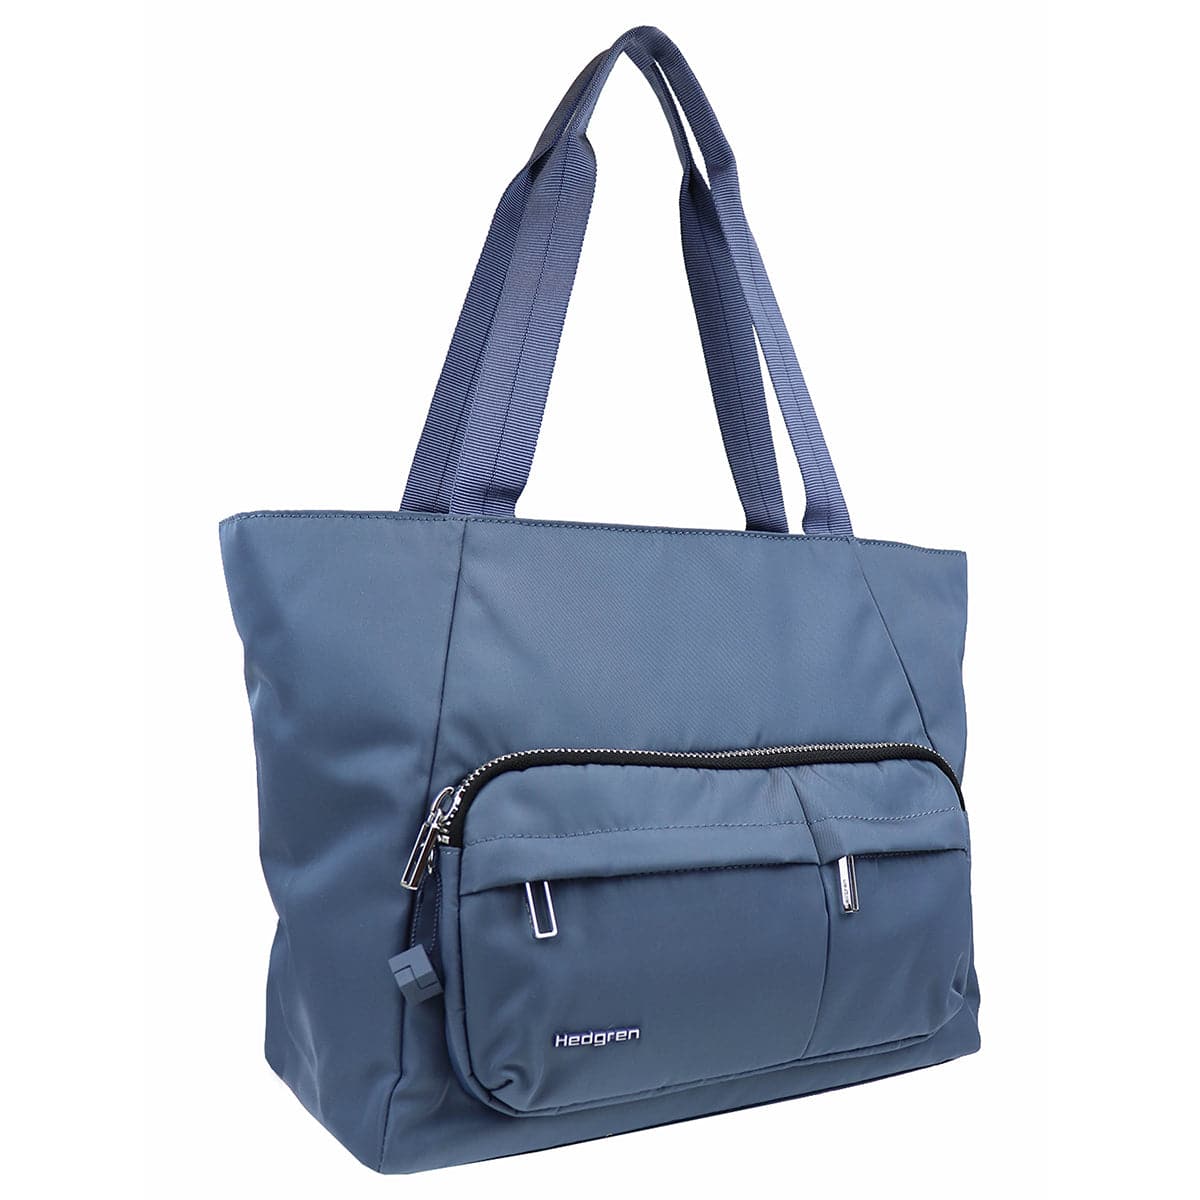 Hedgren Eliana Sustainably Made Tote Bag